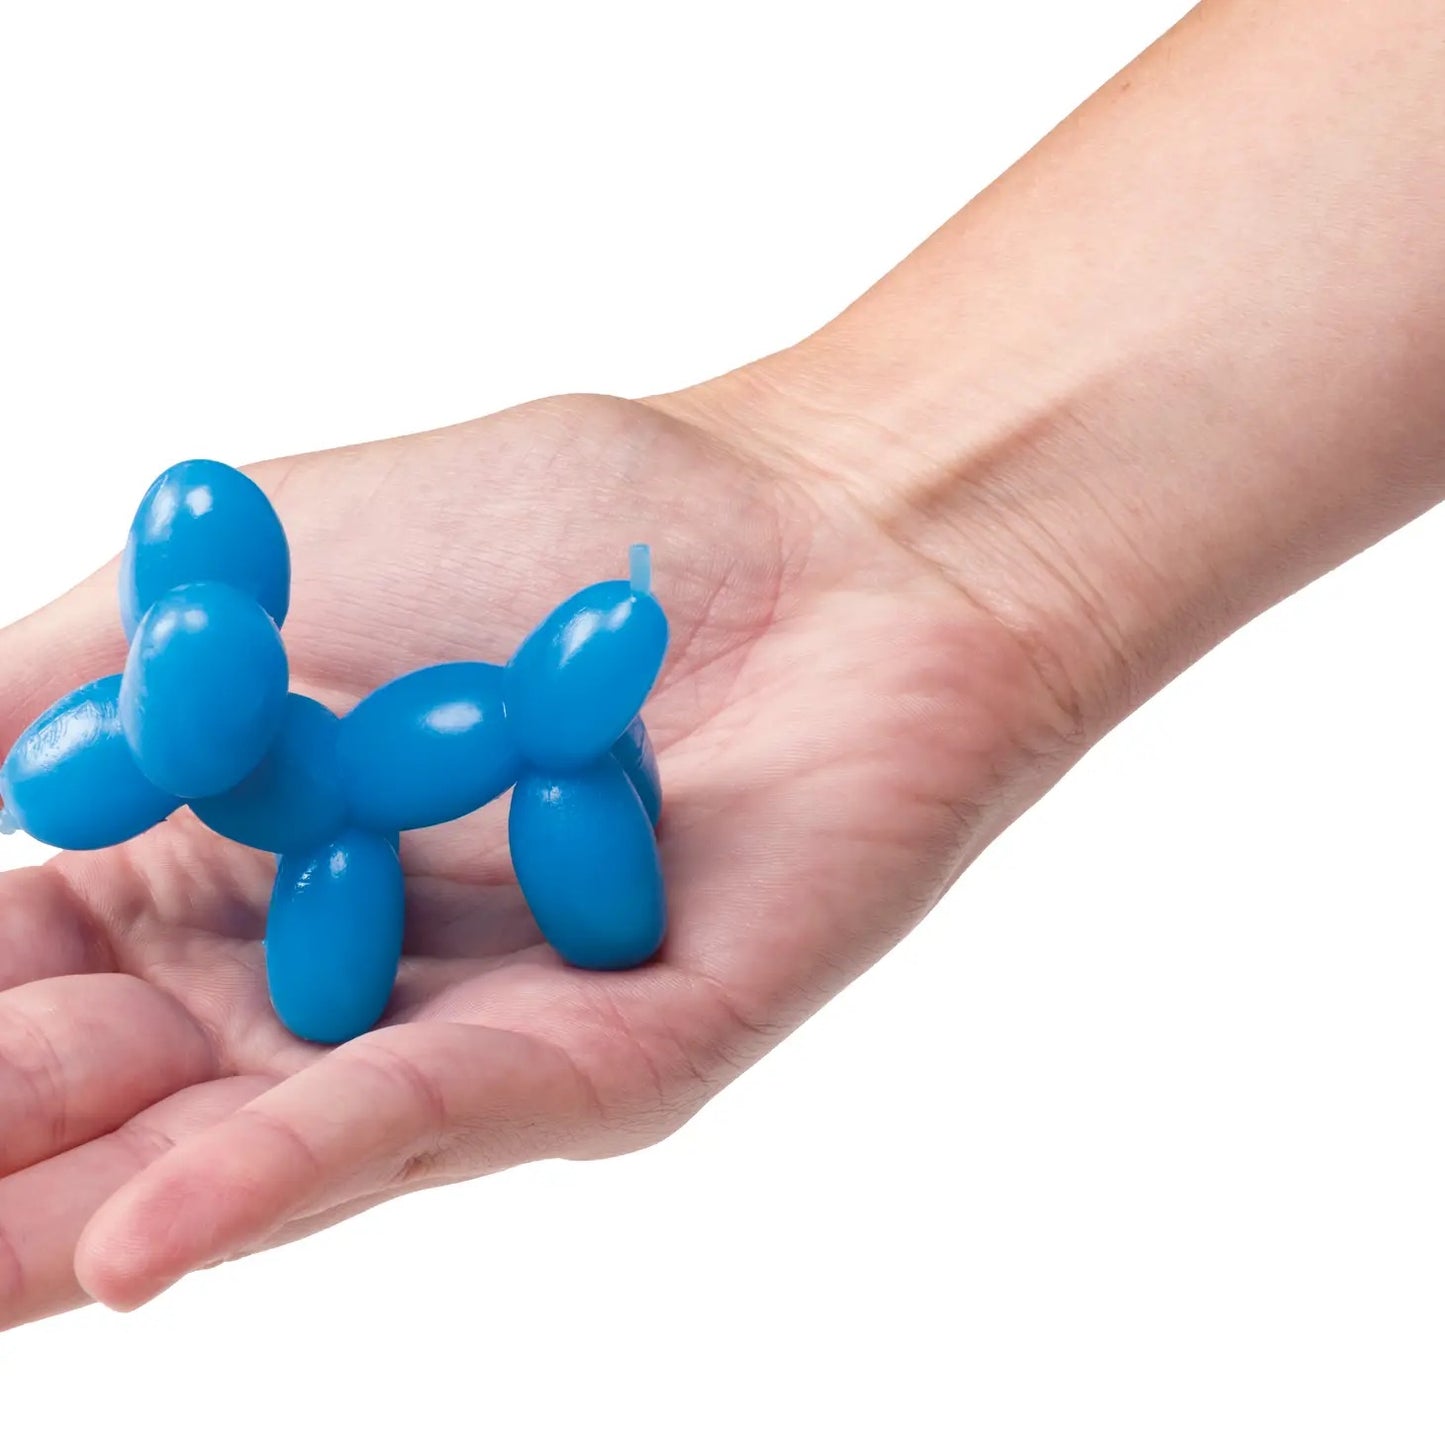 Balloon Dogs (kids toy)